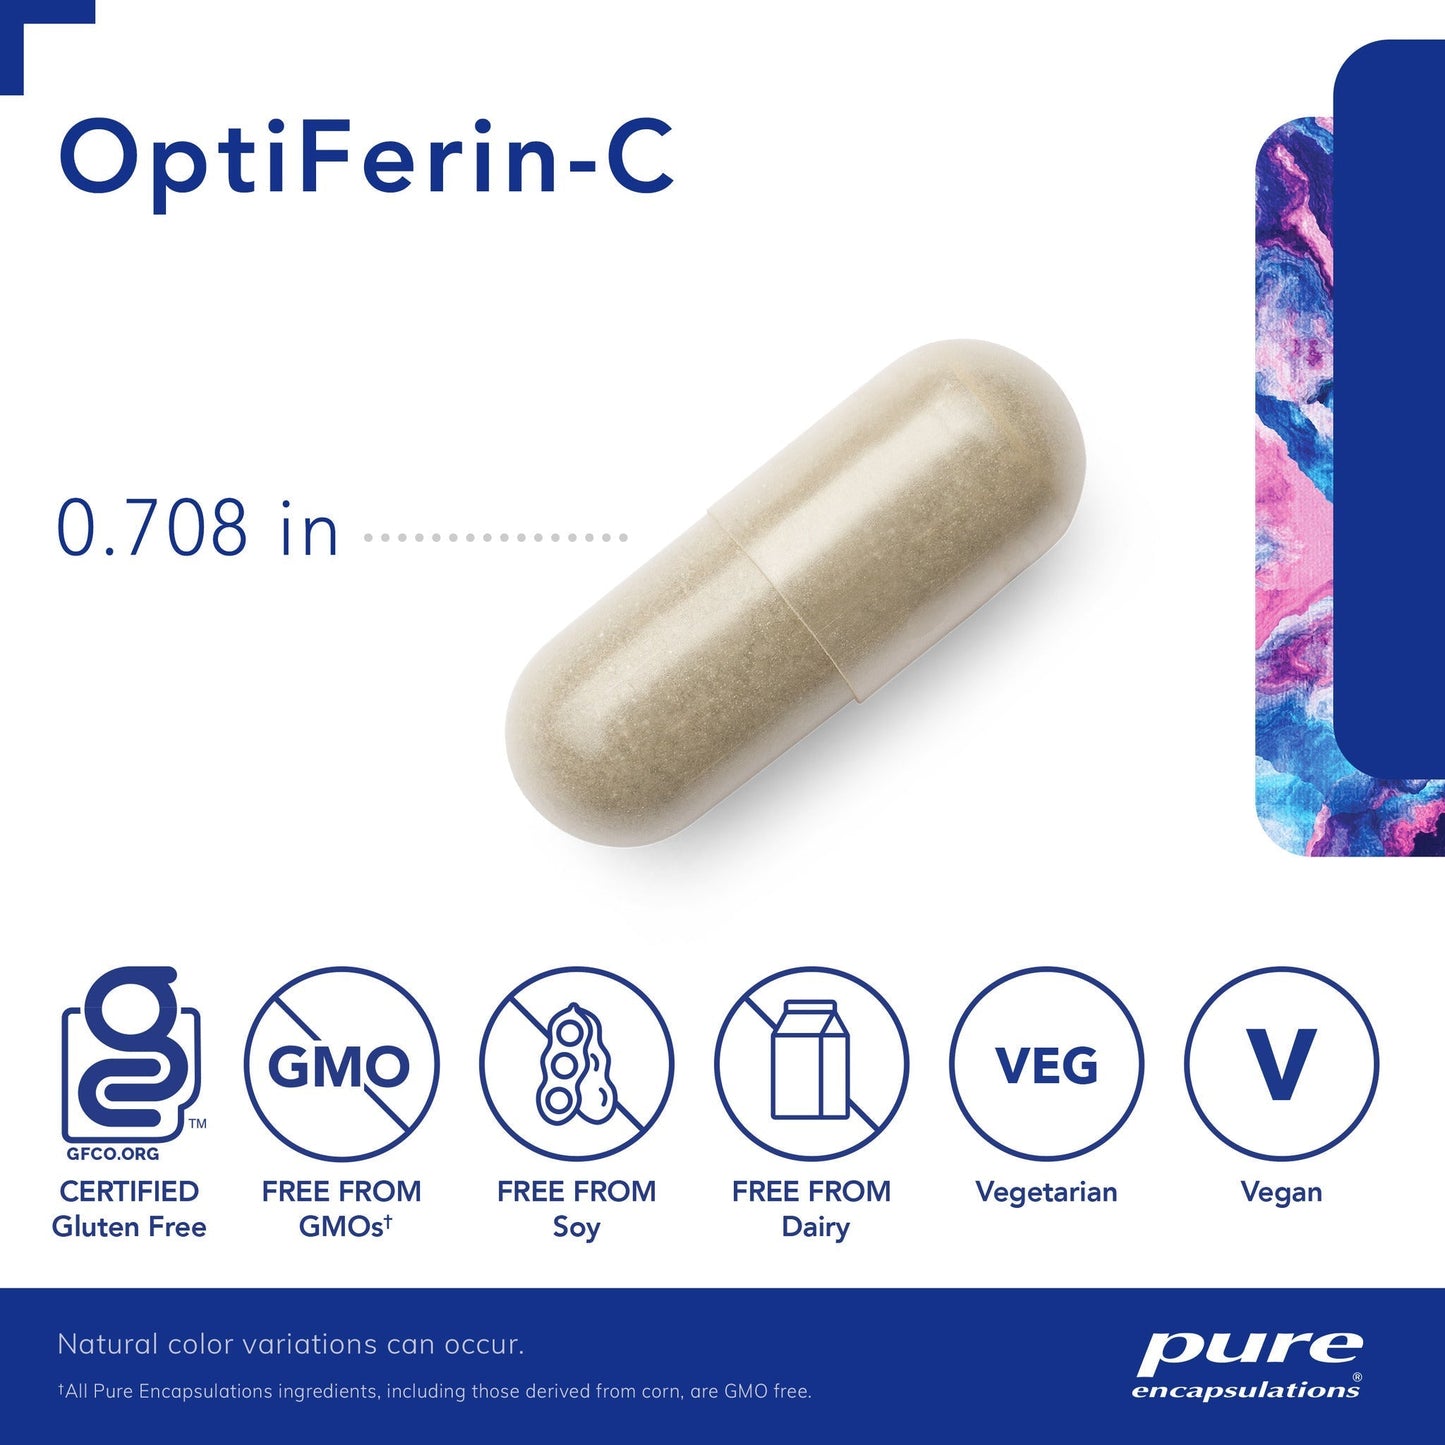 OptiFerin-C